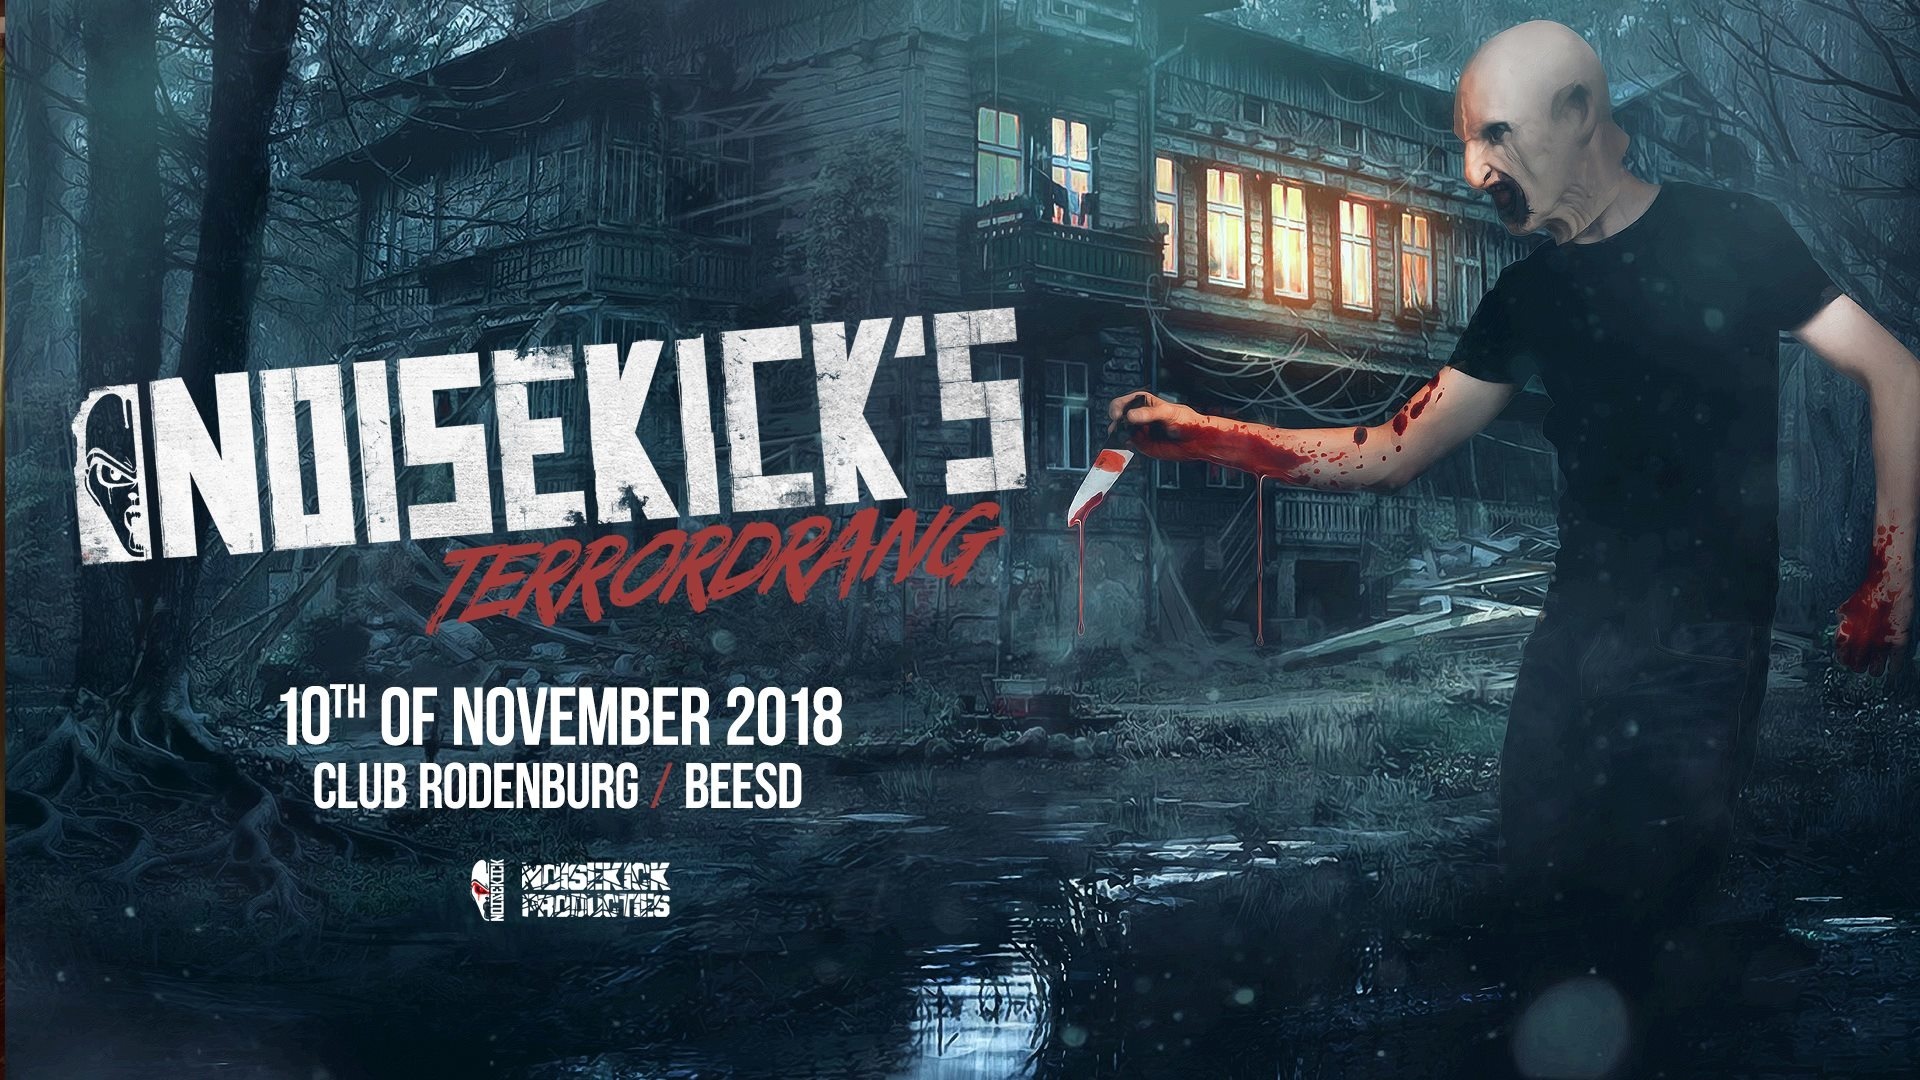 Noisekick terrordrang 2018